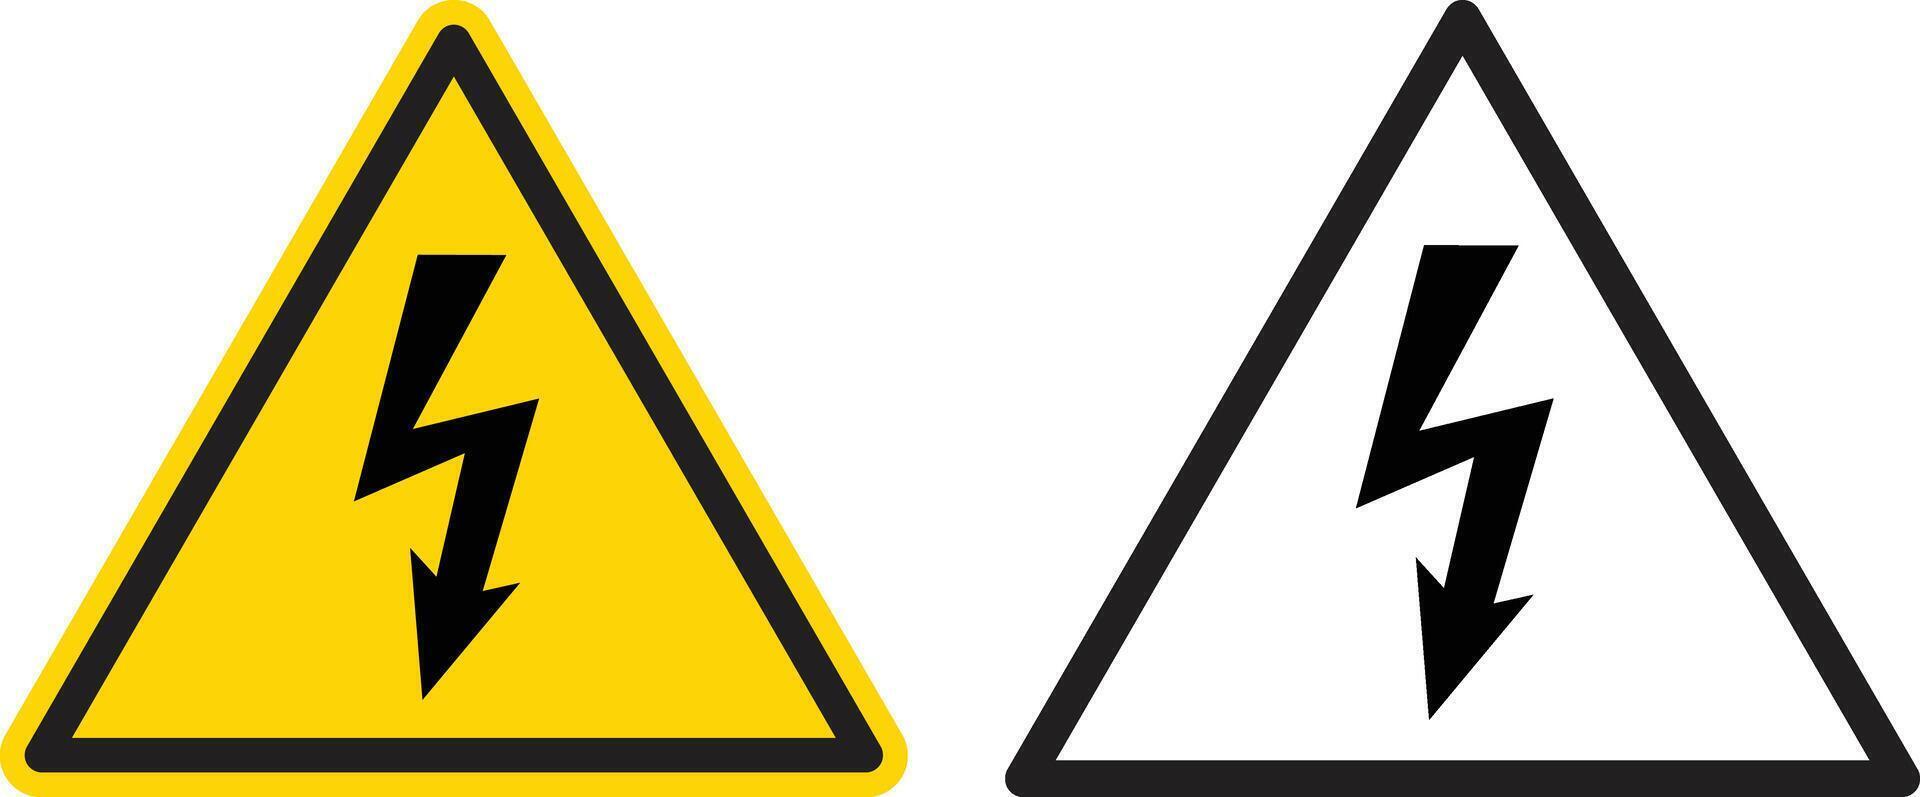 High voltage danger symbol icon set in two styles . Danger symbol vector